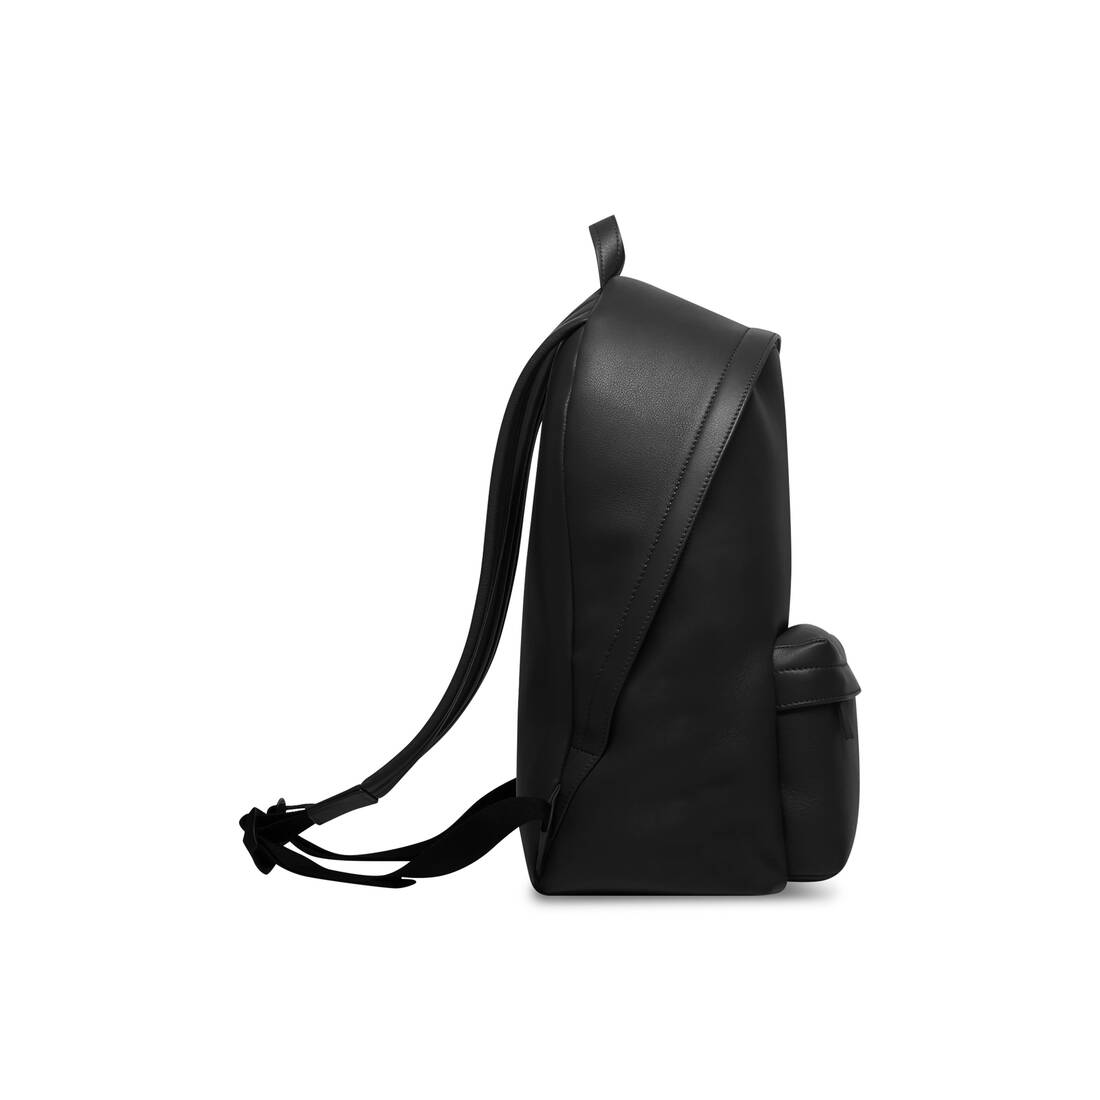 Men's Everyday Backpack in Black